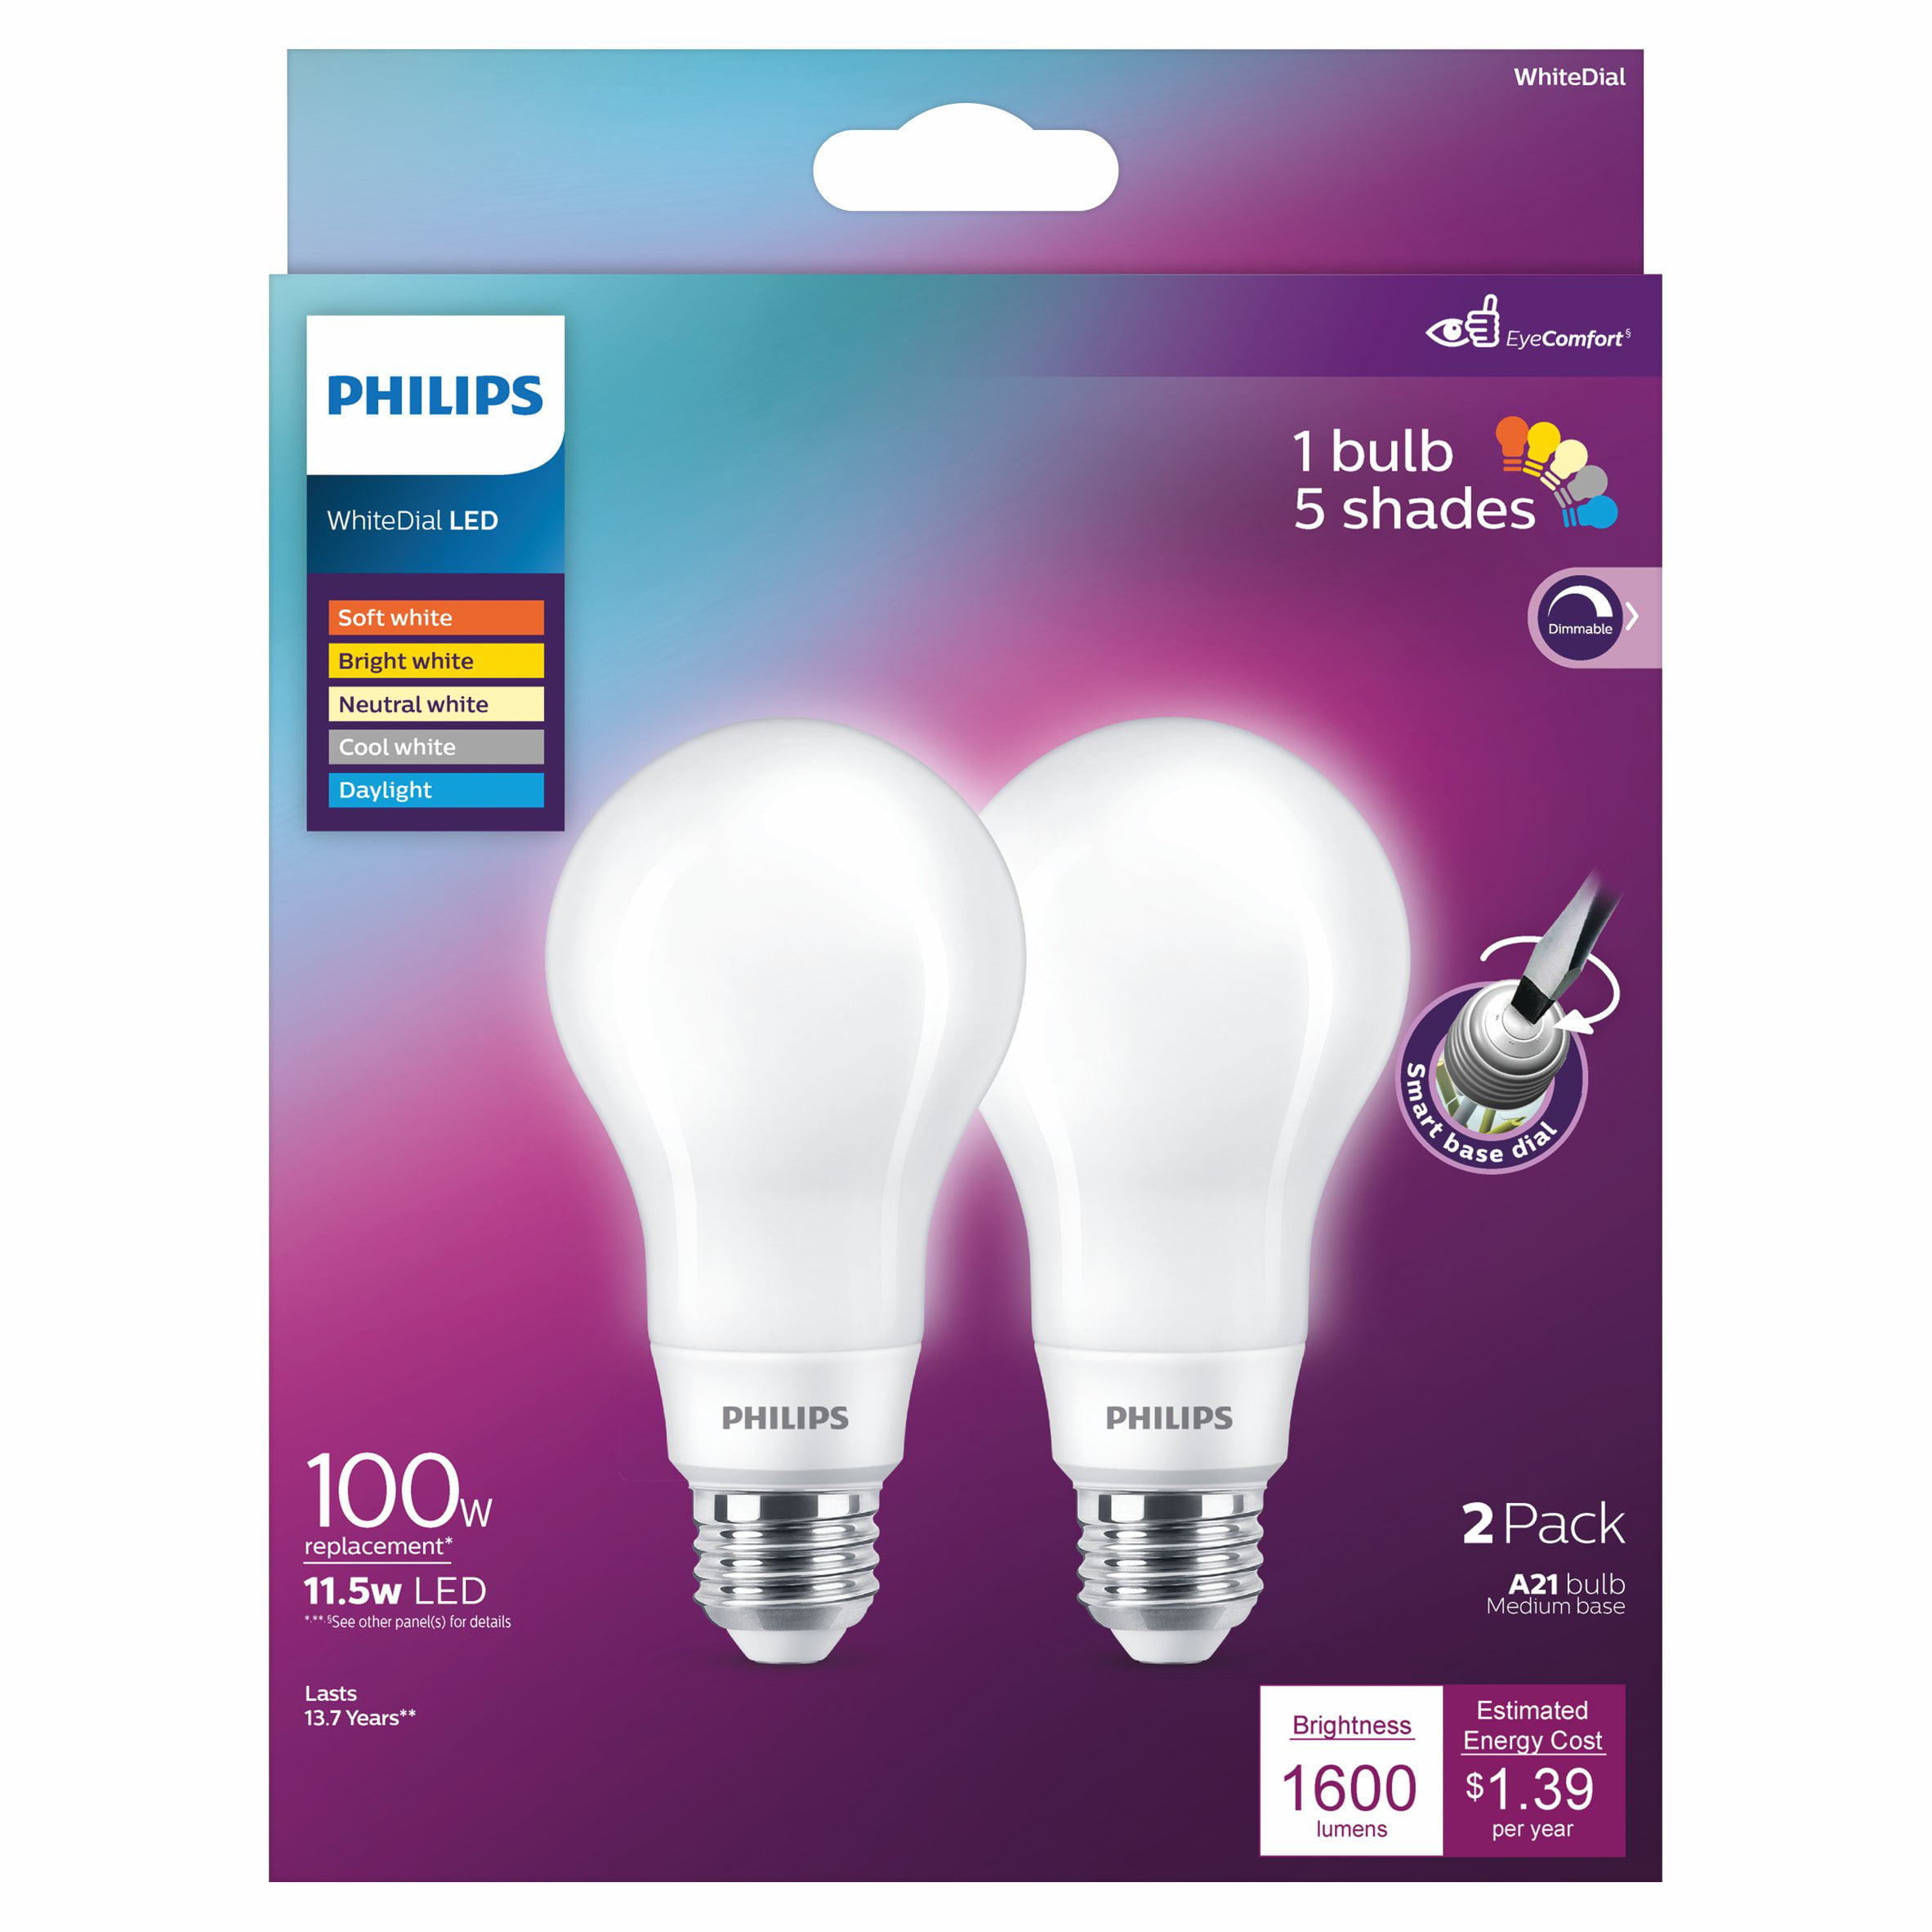 zondaar Zeg opzij Een centrale tool die een belangrijke rol speelt Philips LED 100-Watt A21 General Purpose Household Light Bulb, Frosted  WhiteDial, Dimmable, E26 Medium Base (2-Pack) - Walmart.com